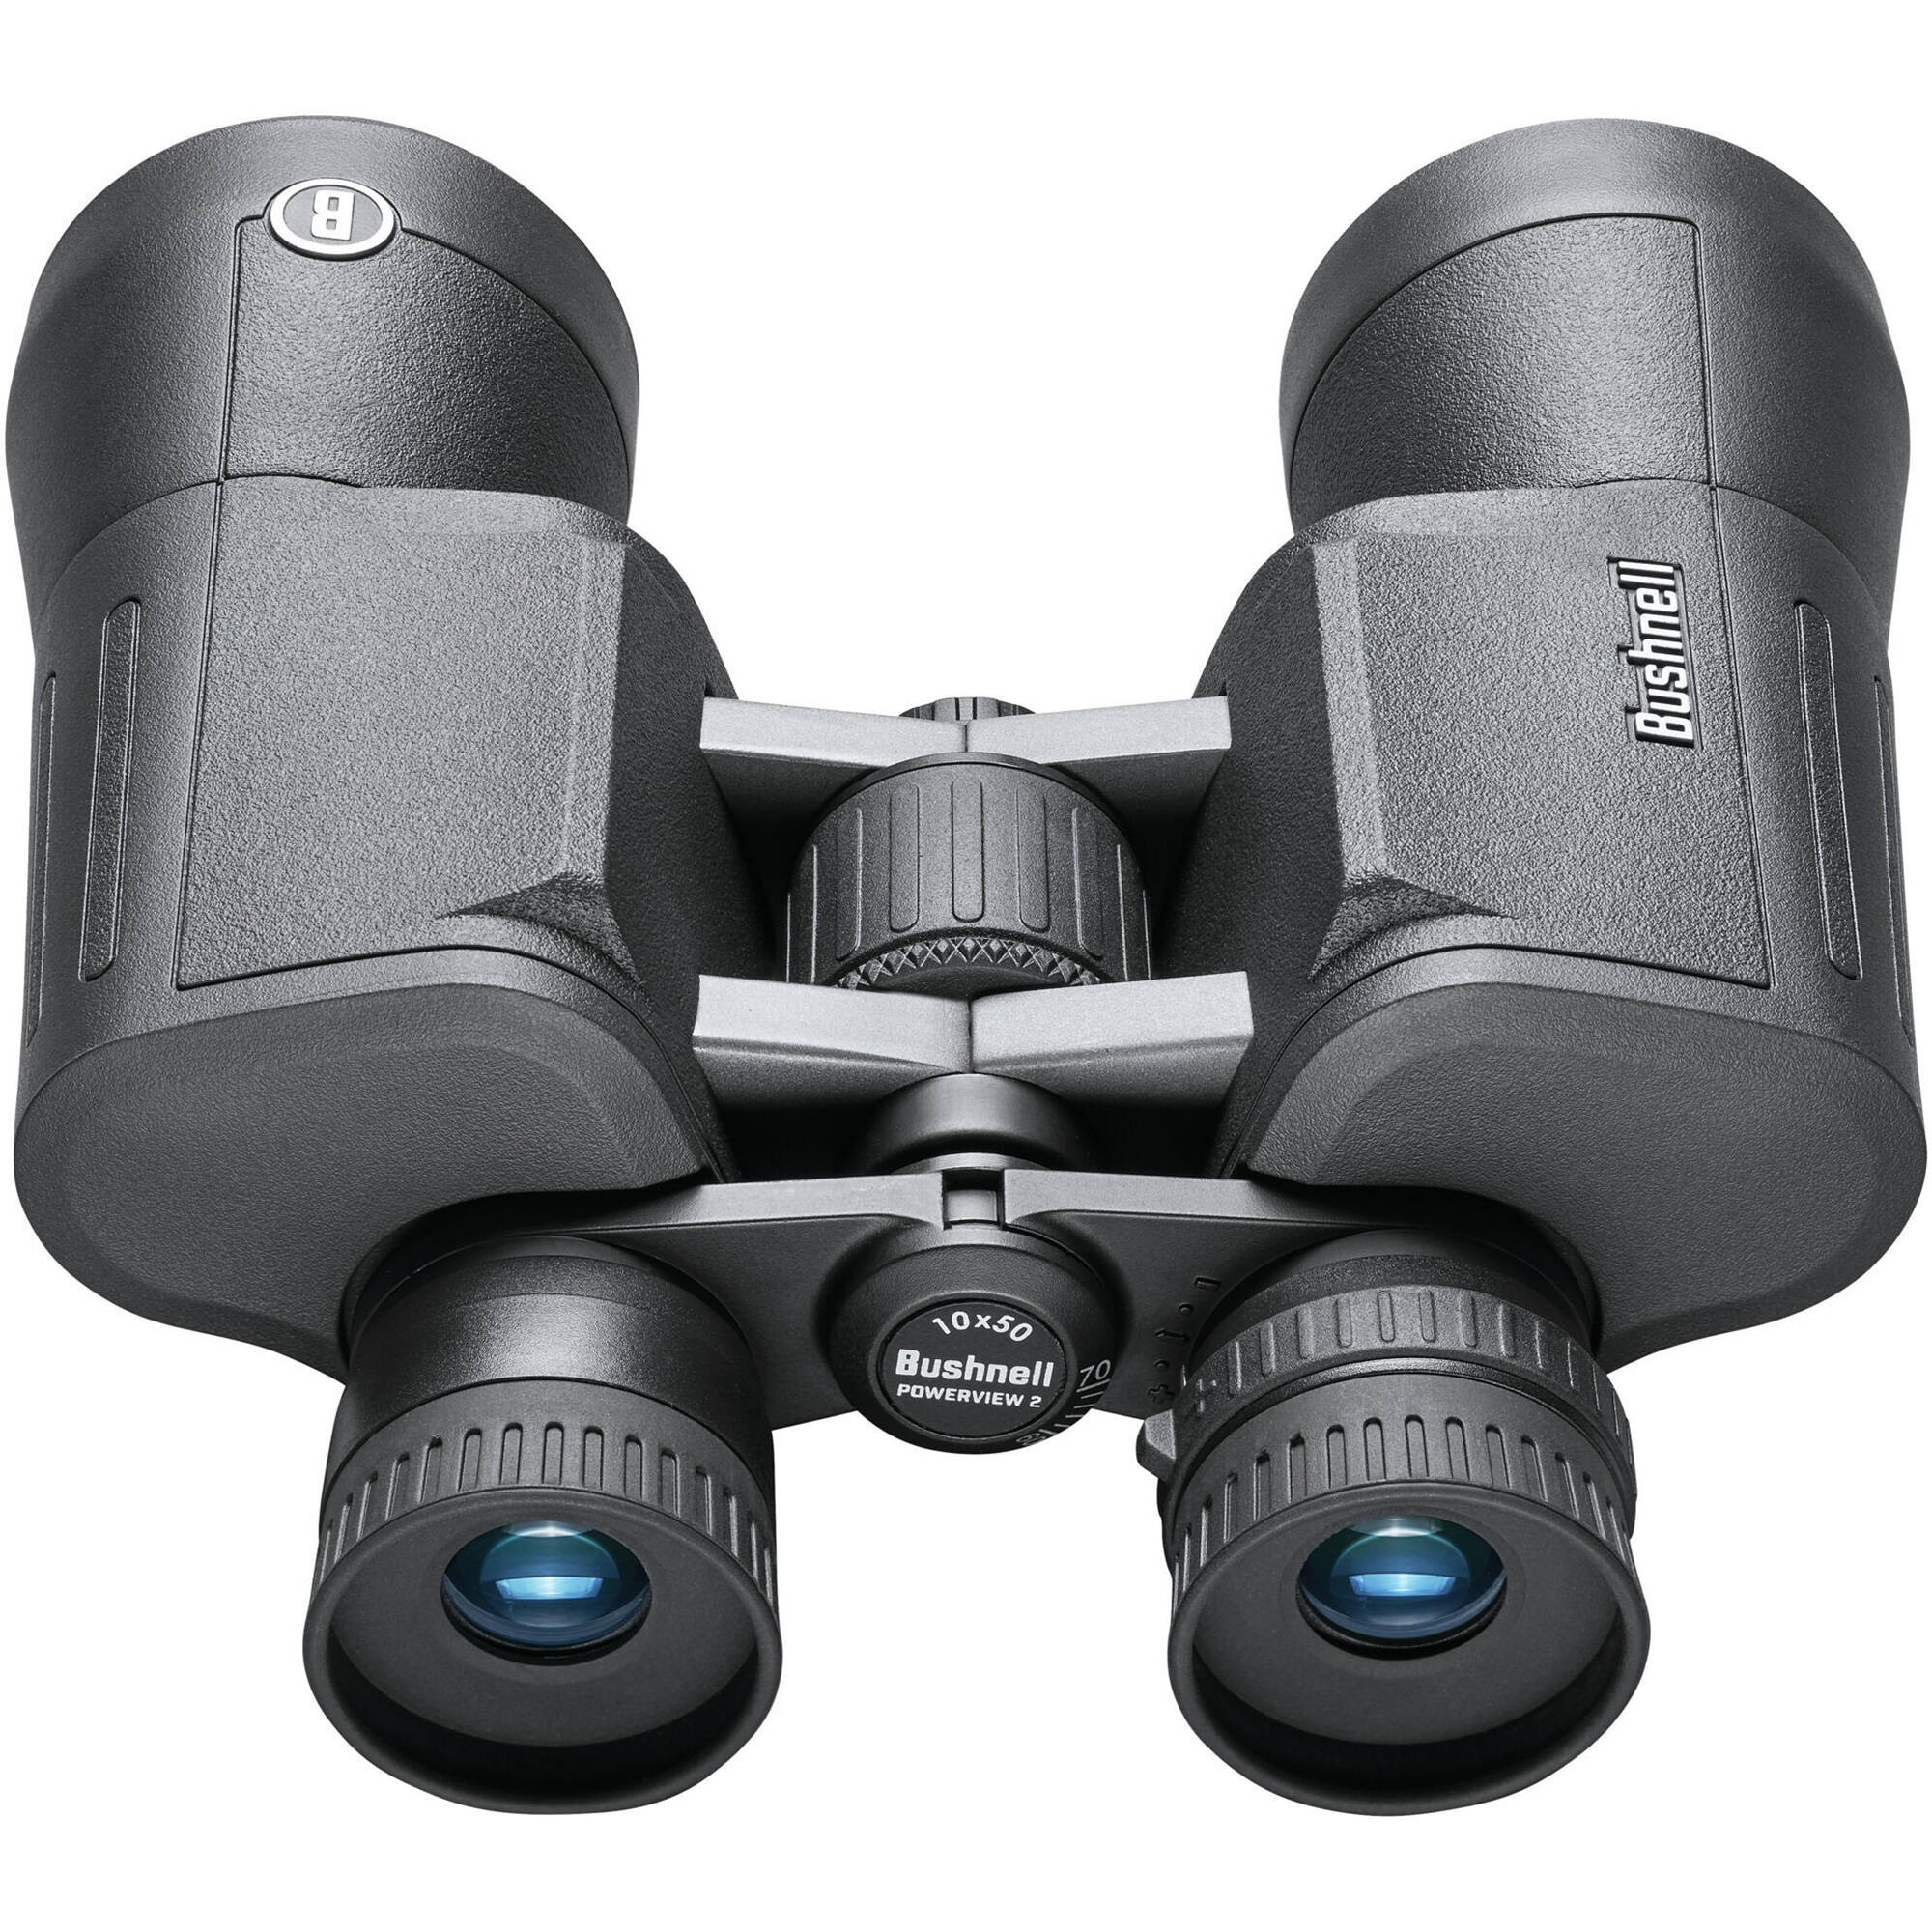 Bushnell 10x50 Powerview 2.0 Roof Prism Binoculars